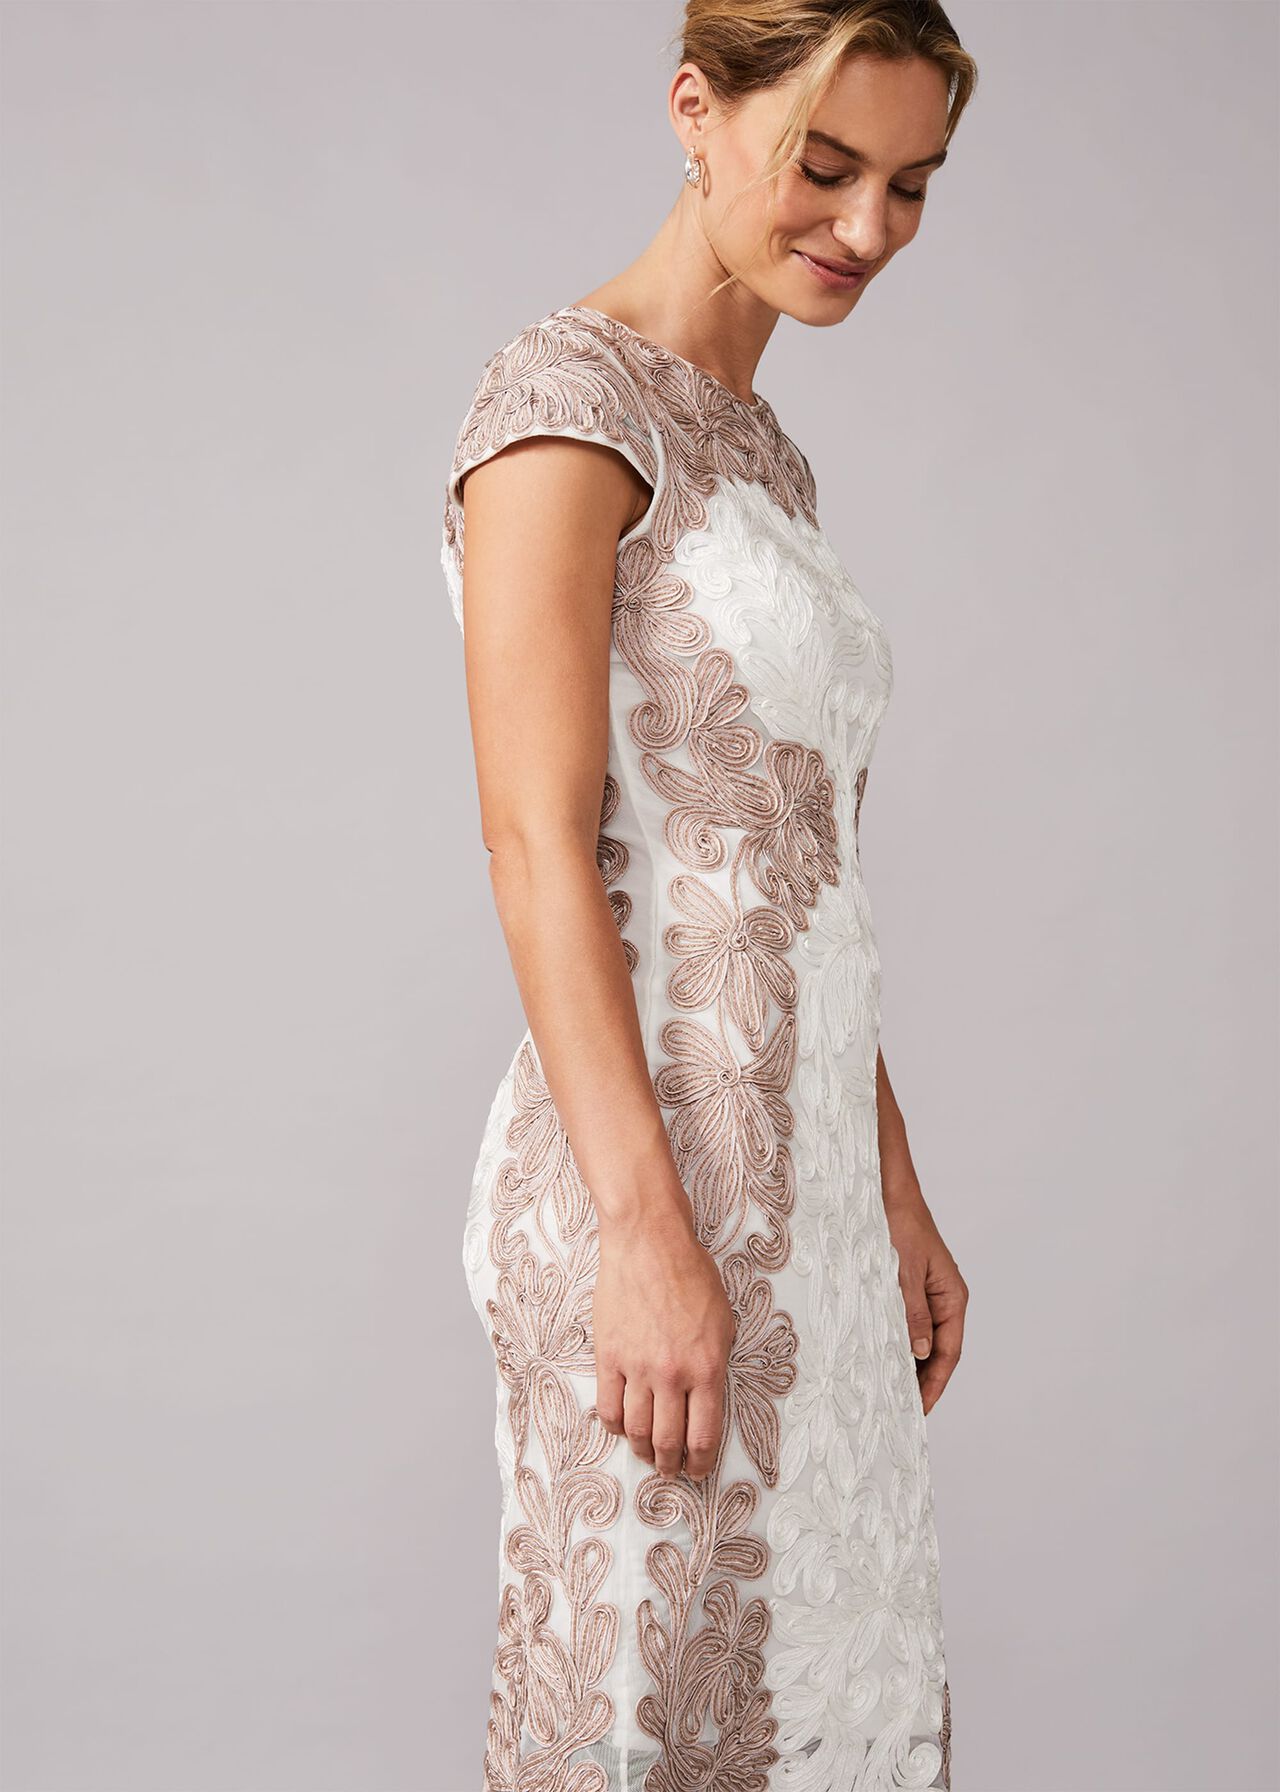 Nori Tapework Lace Fitted Dress